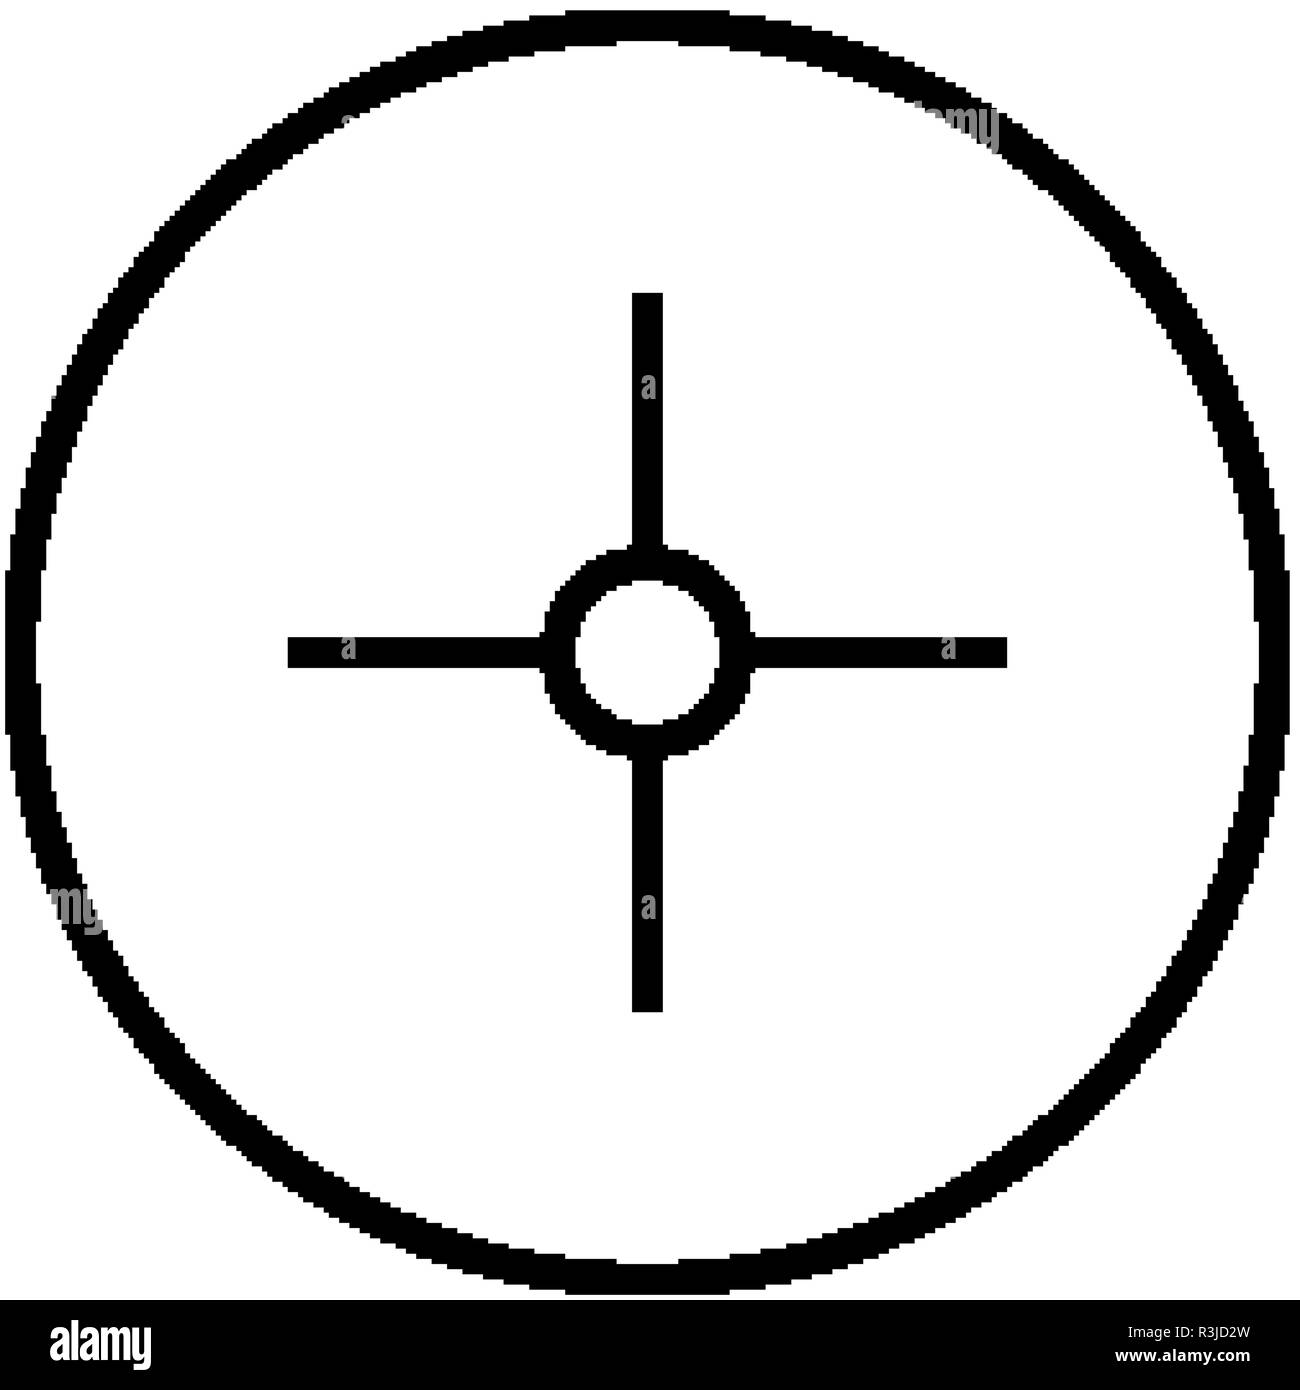 Sniper scope crosshairs thin icon set. Isolated rifle gun target Stock Vector